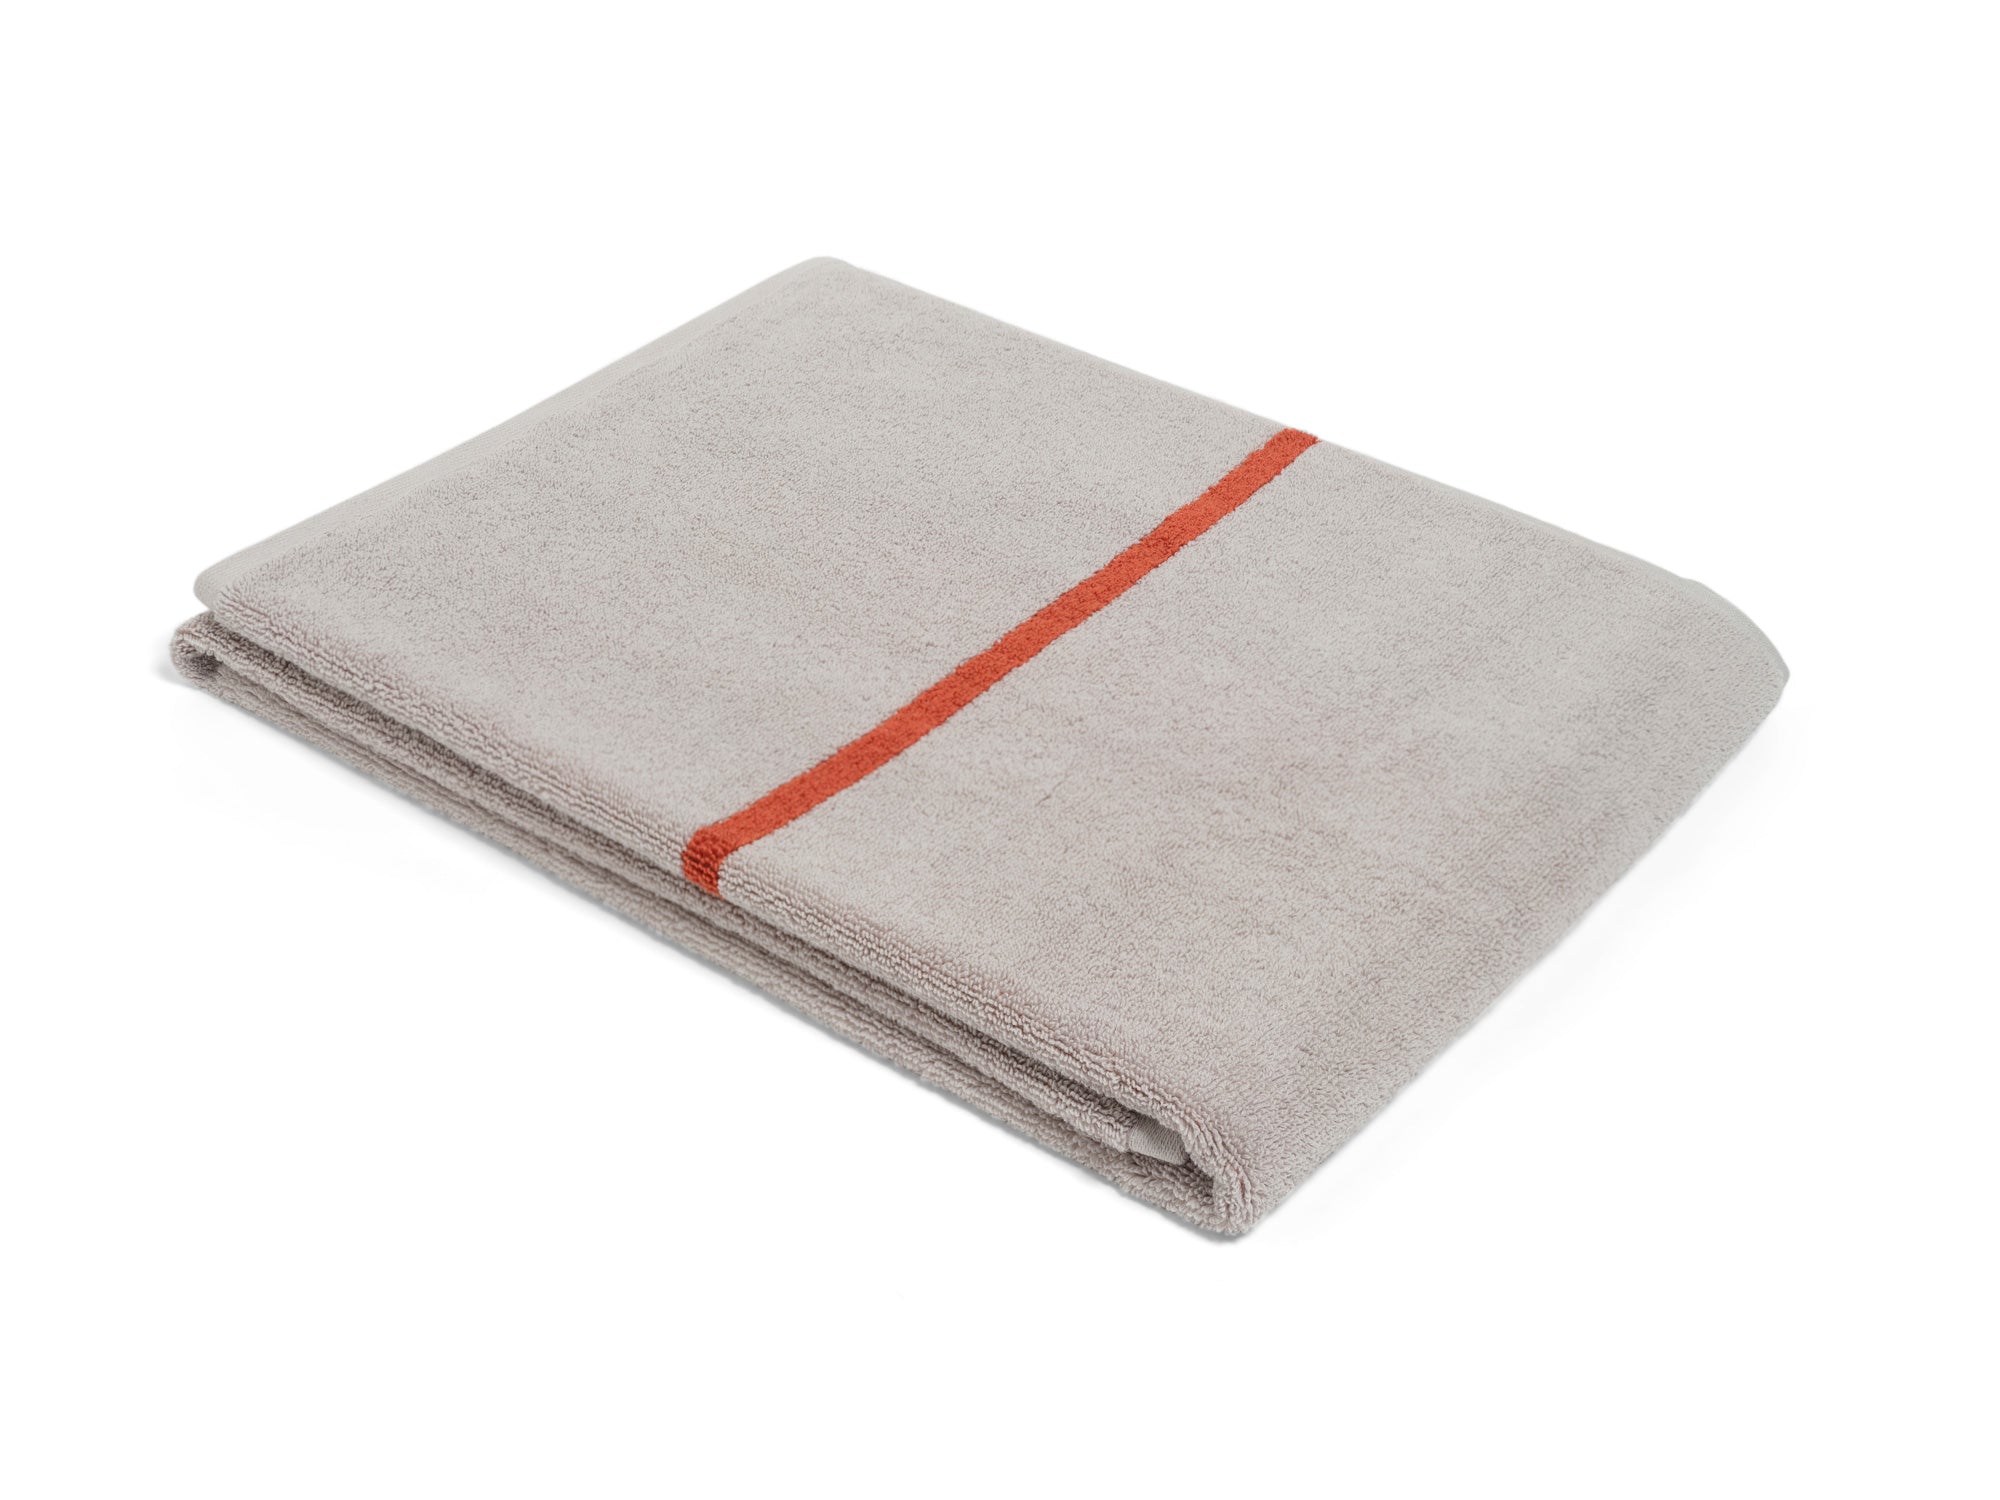 Bath Sheet - Terracotta/Stone - Simple Stripe